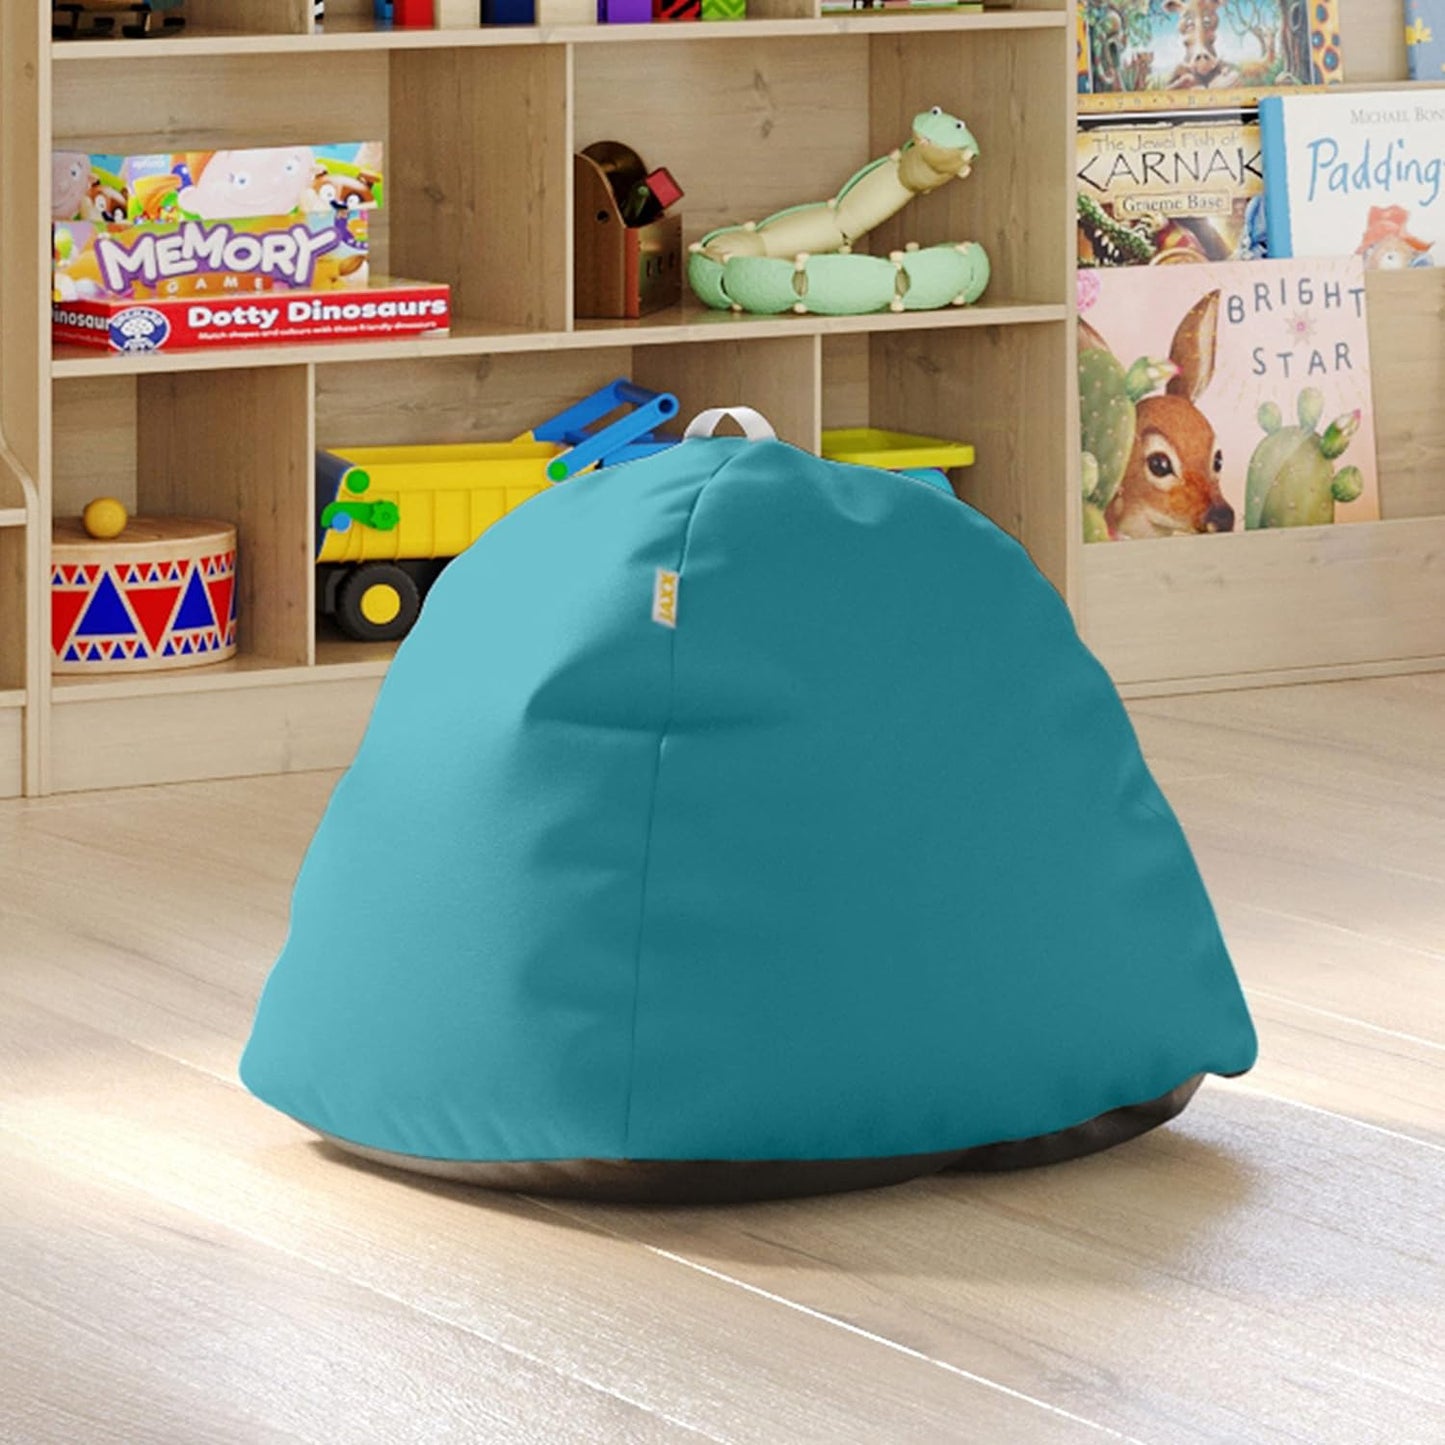 Gumdrop Jr. Kids Bean Bag for Early Childhood & Educational Environments, Premium Vinyl - Turquoise